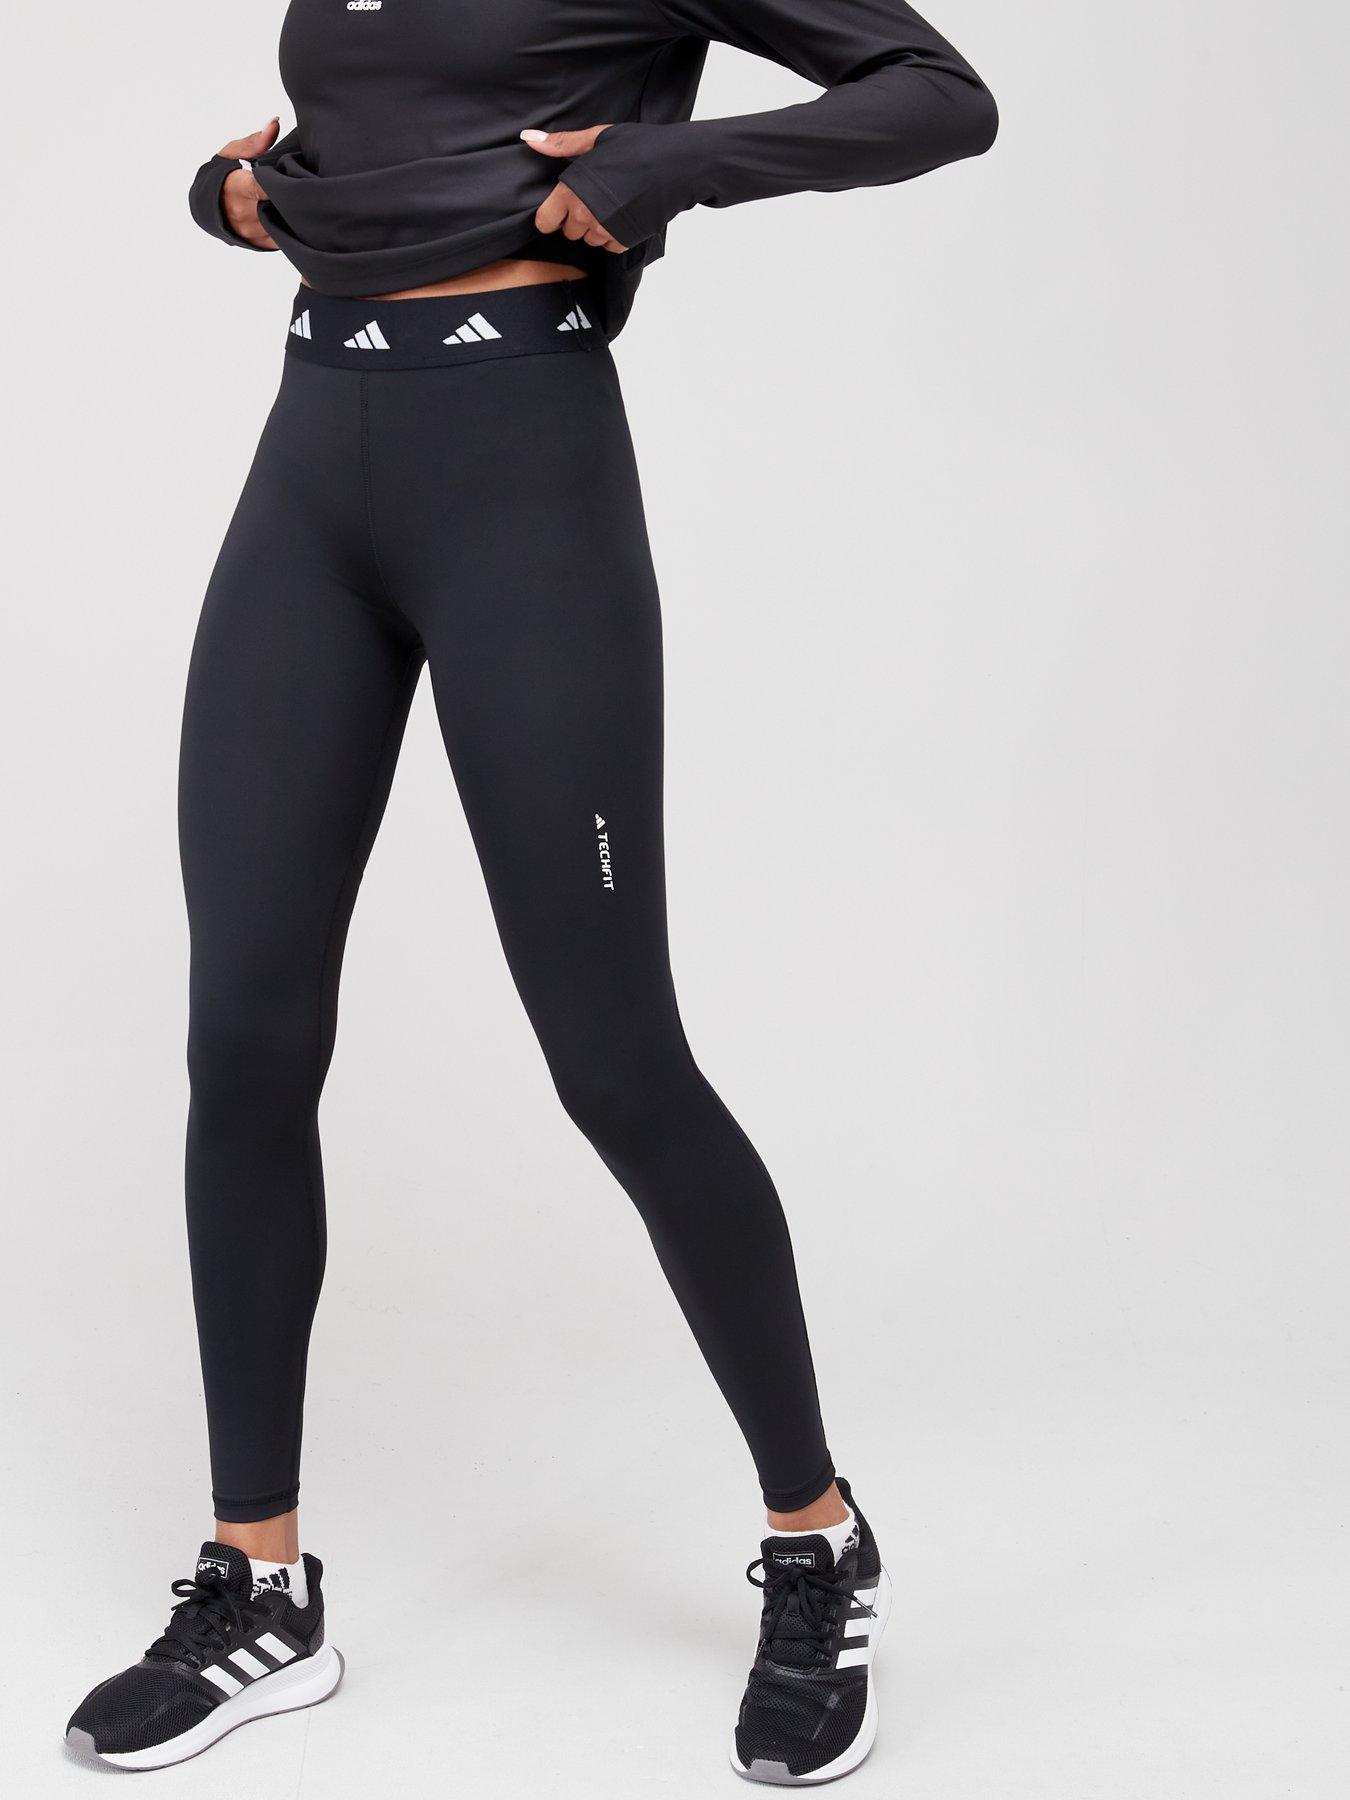 Adidas Techfit Climalite Athletic Yoga Running Leggings Womens